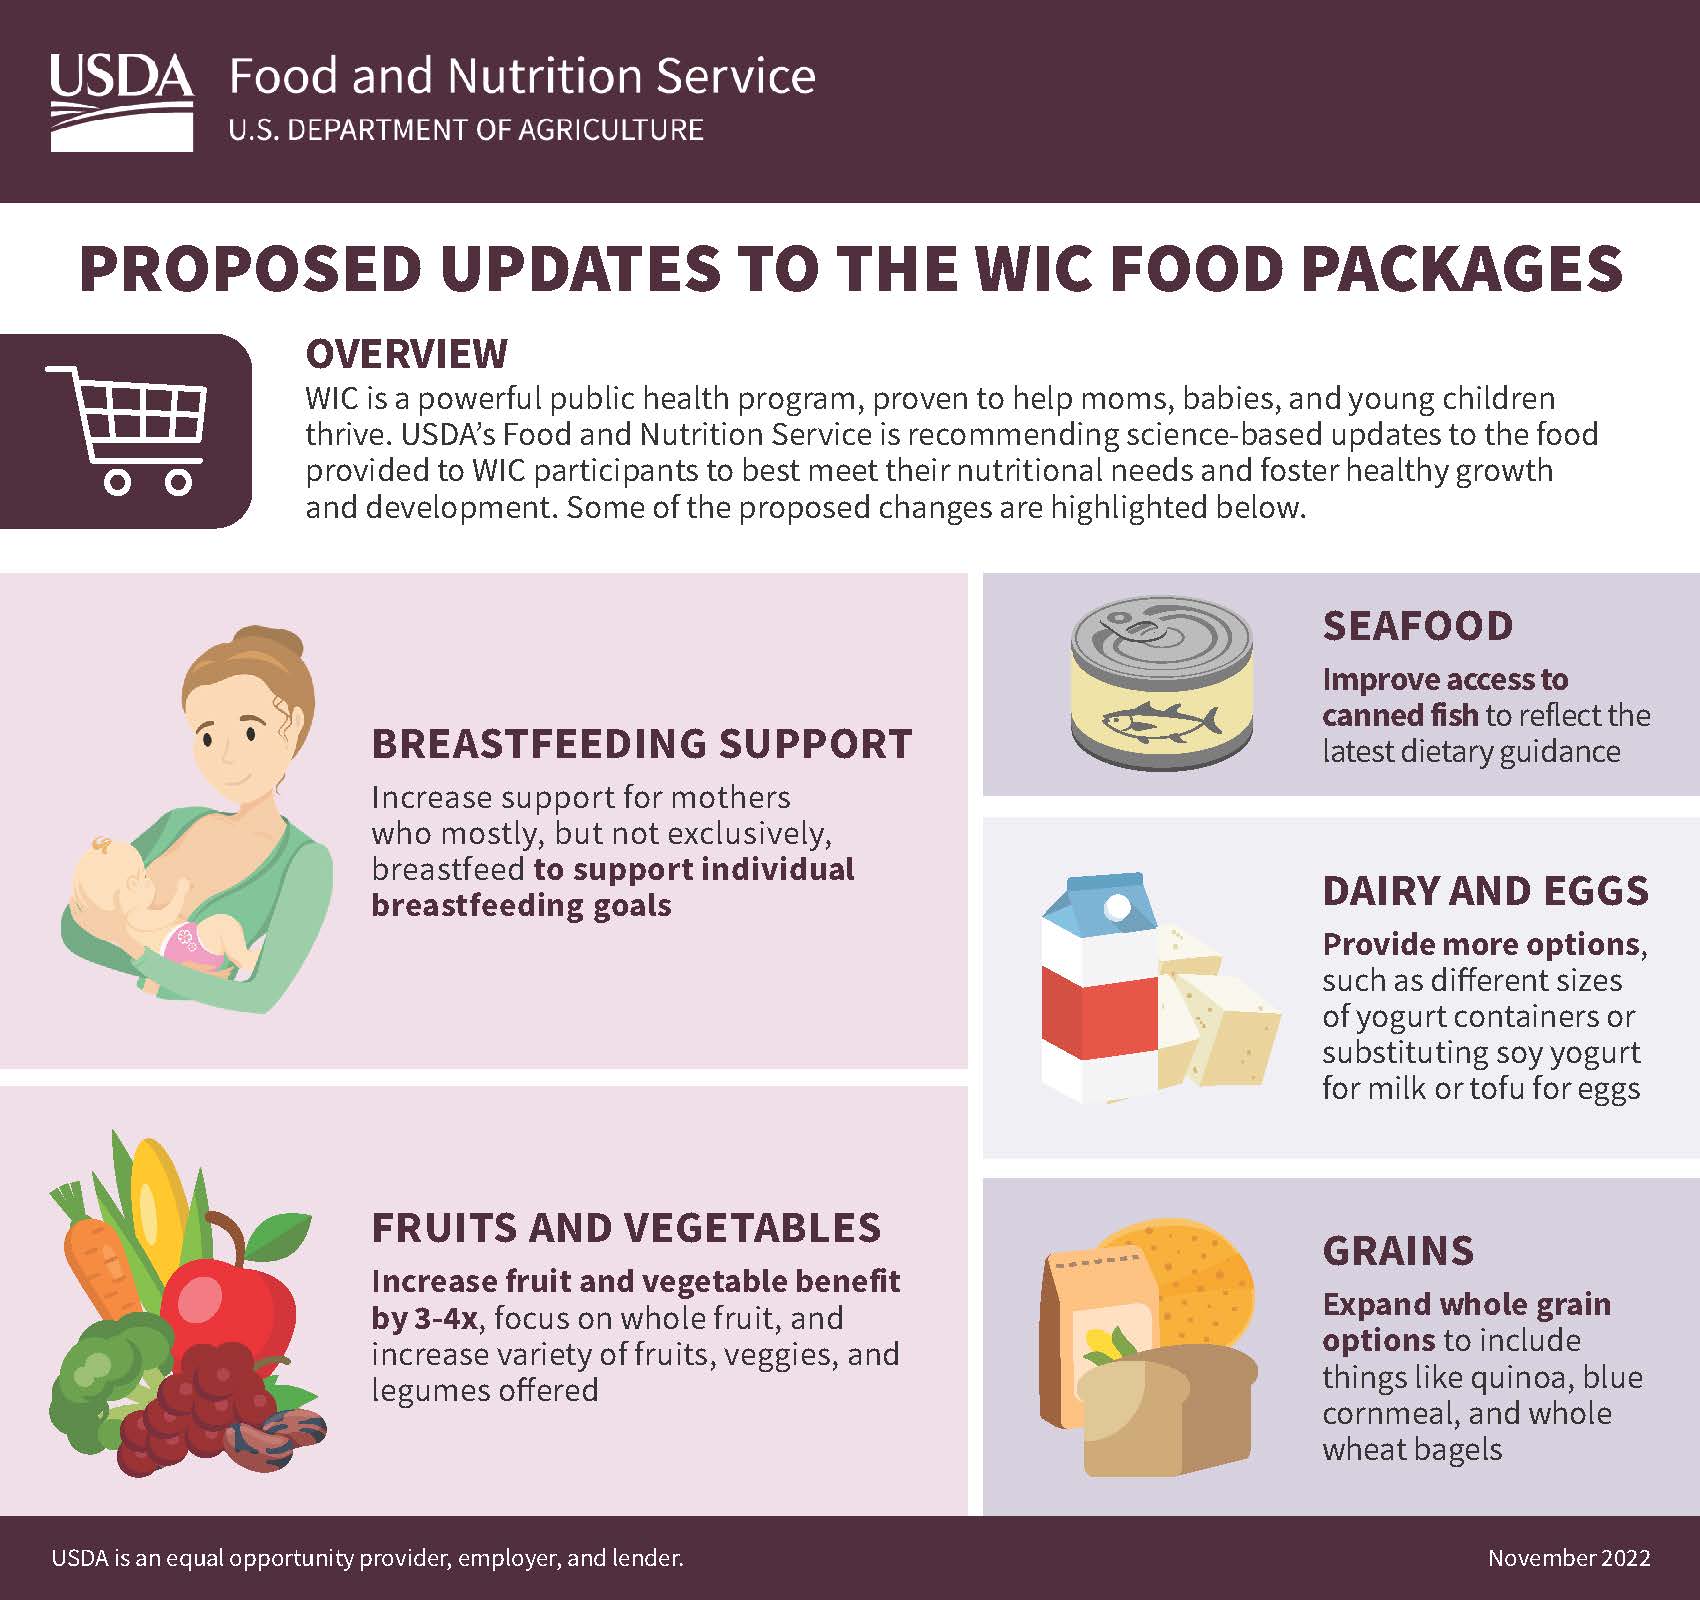 https://www.usda.gov/sites/default/files/wic-food-packages-updates-infographic.jpg